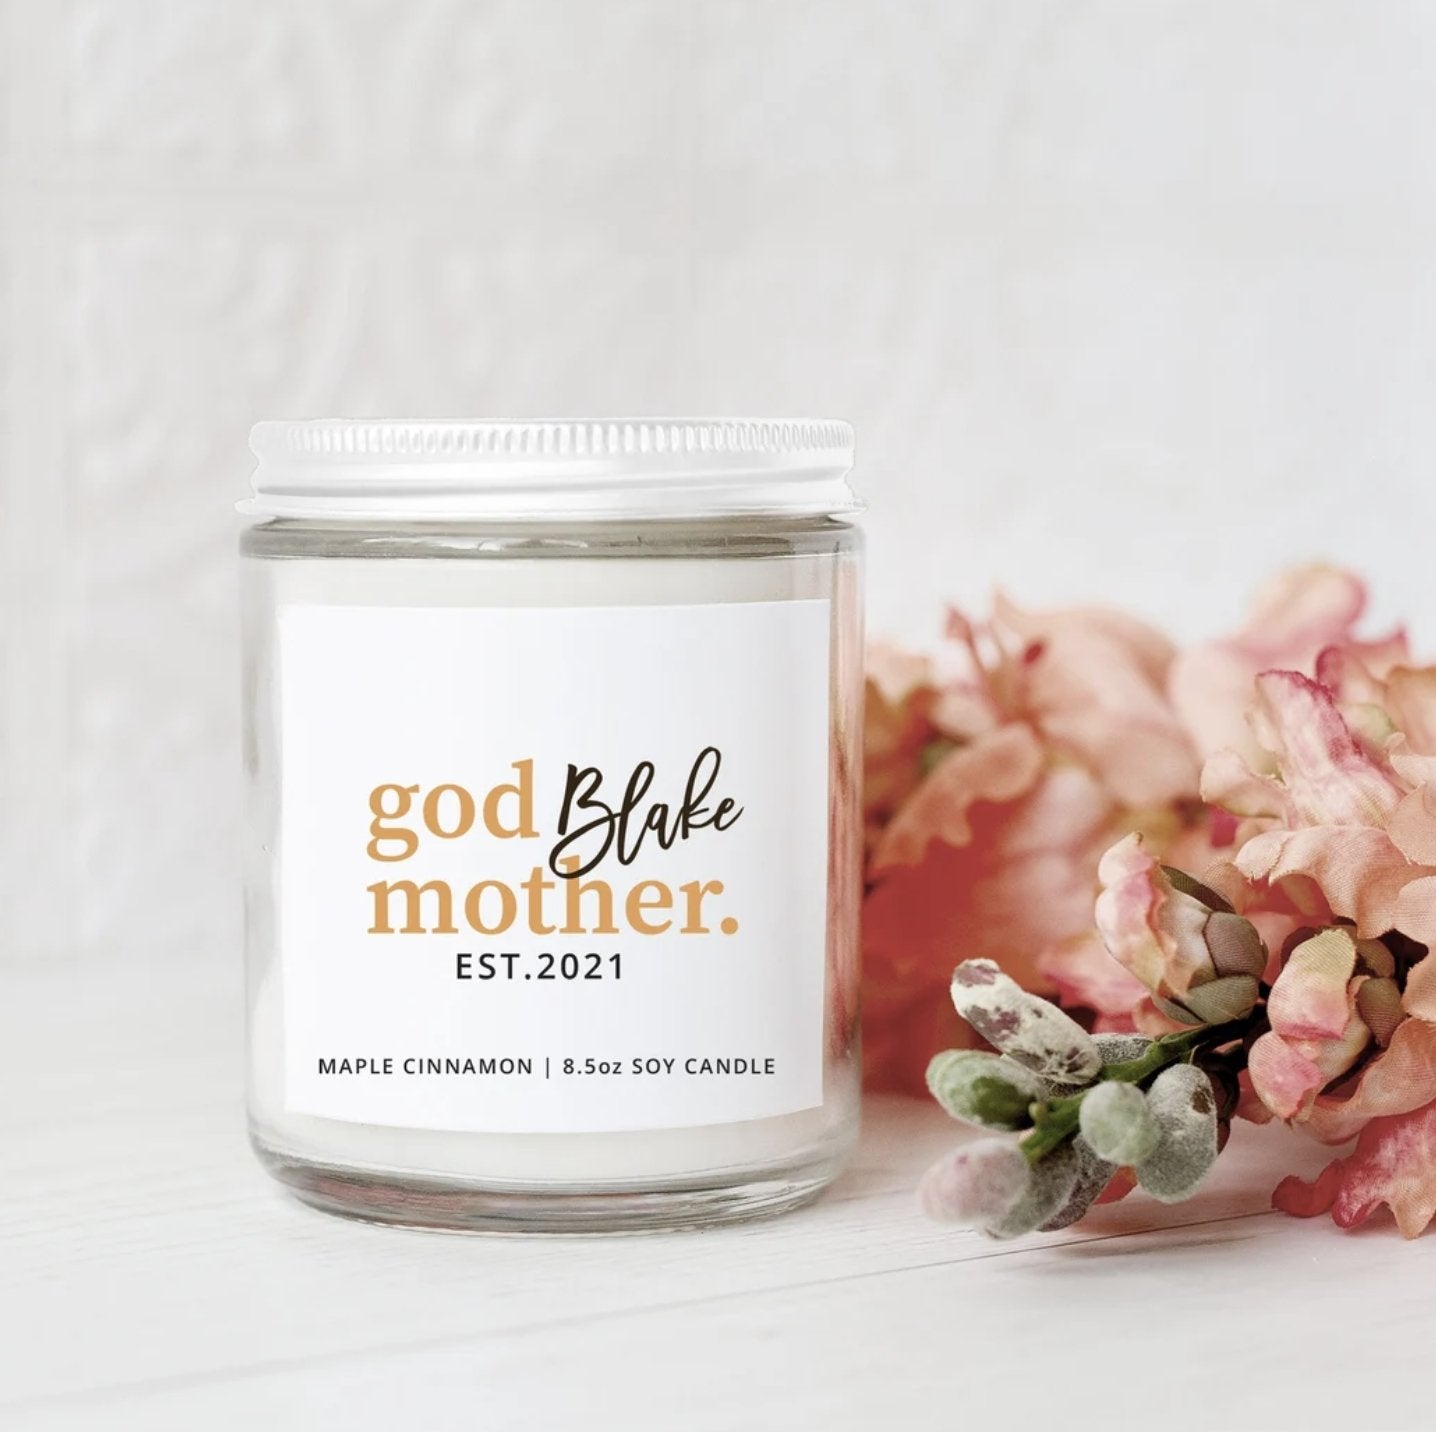 Godmother Gifts Nacho Average Godmother Mug Birthday Gift for Godmother Christmas  Mother's Day Gift – BackyardPeaks